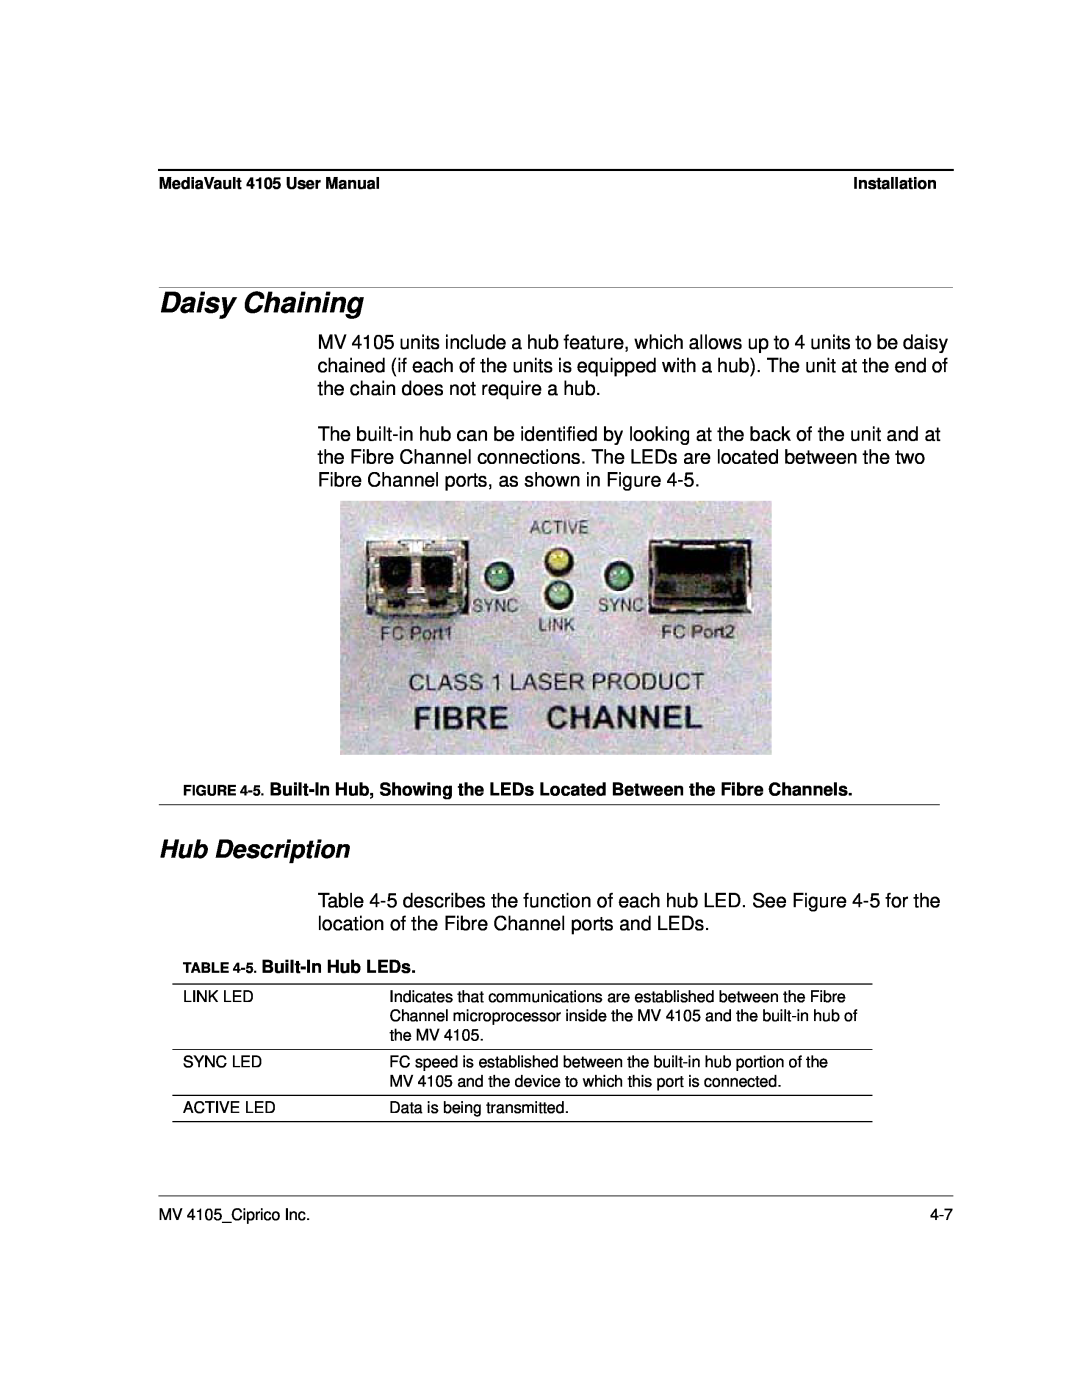 Ciprico 4105 Series user manual Daisy Chaining, Hub Description 